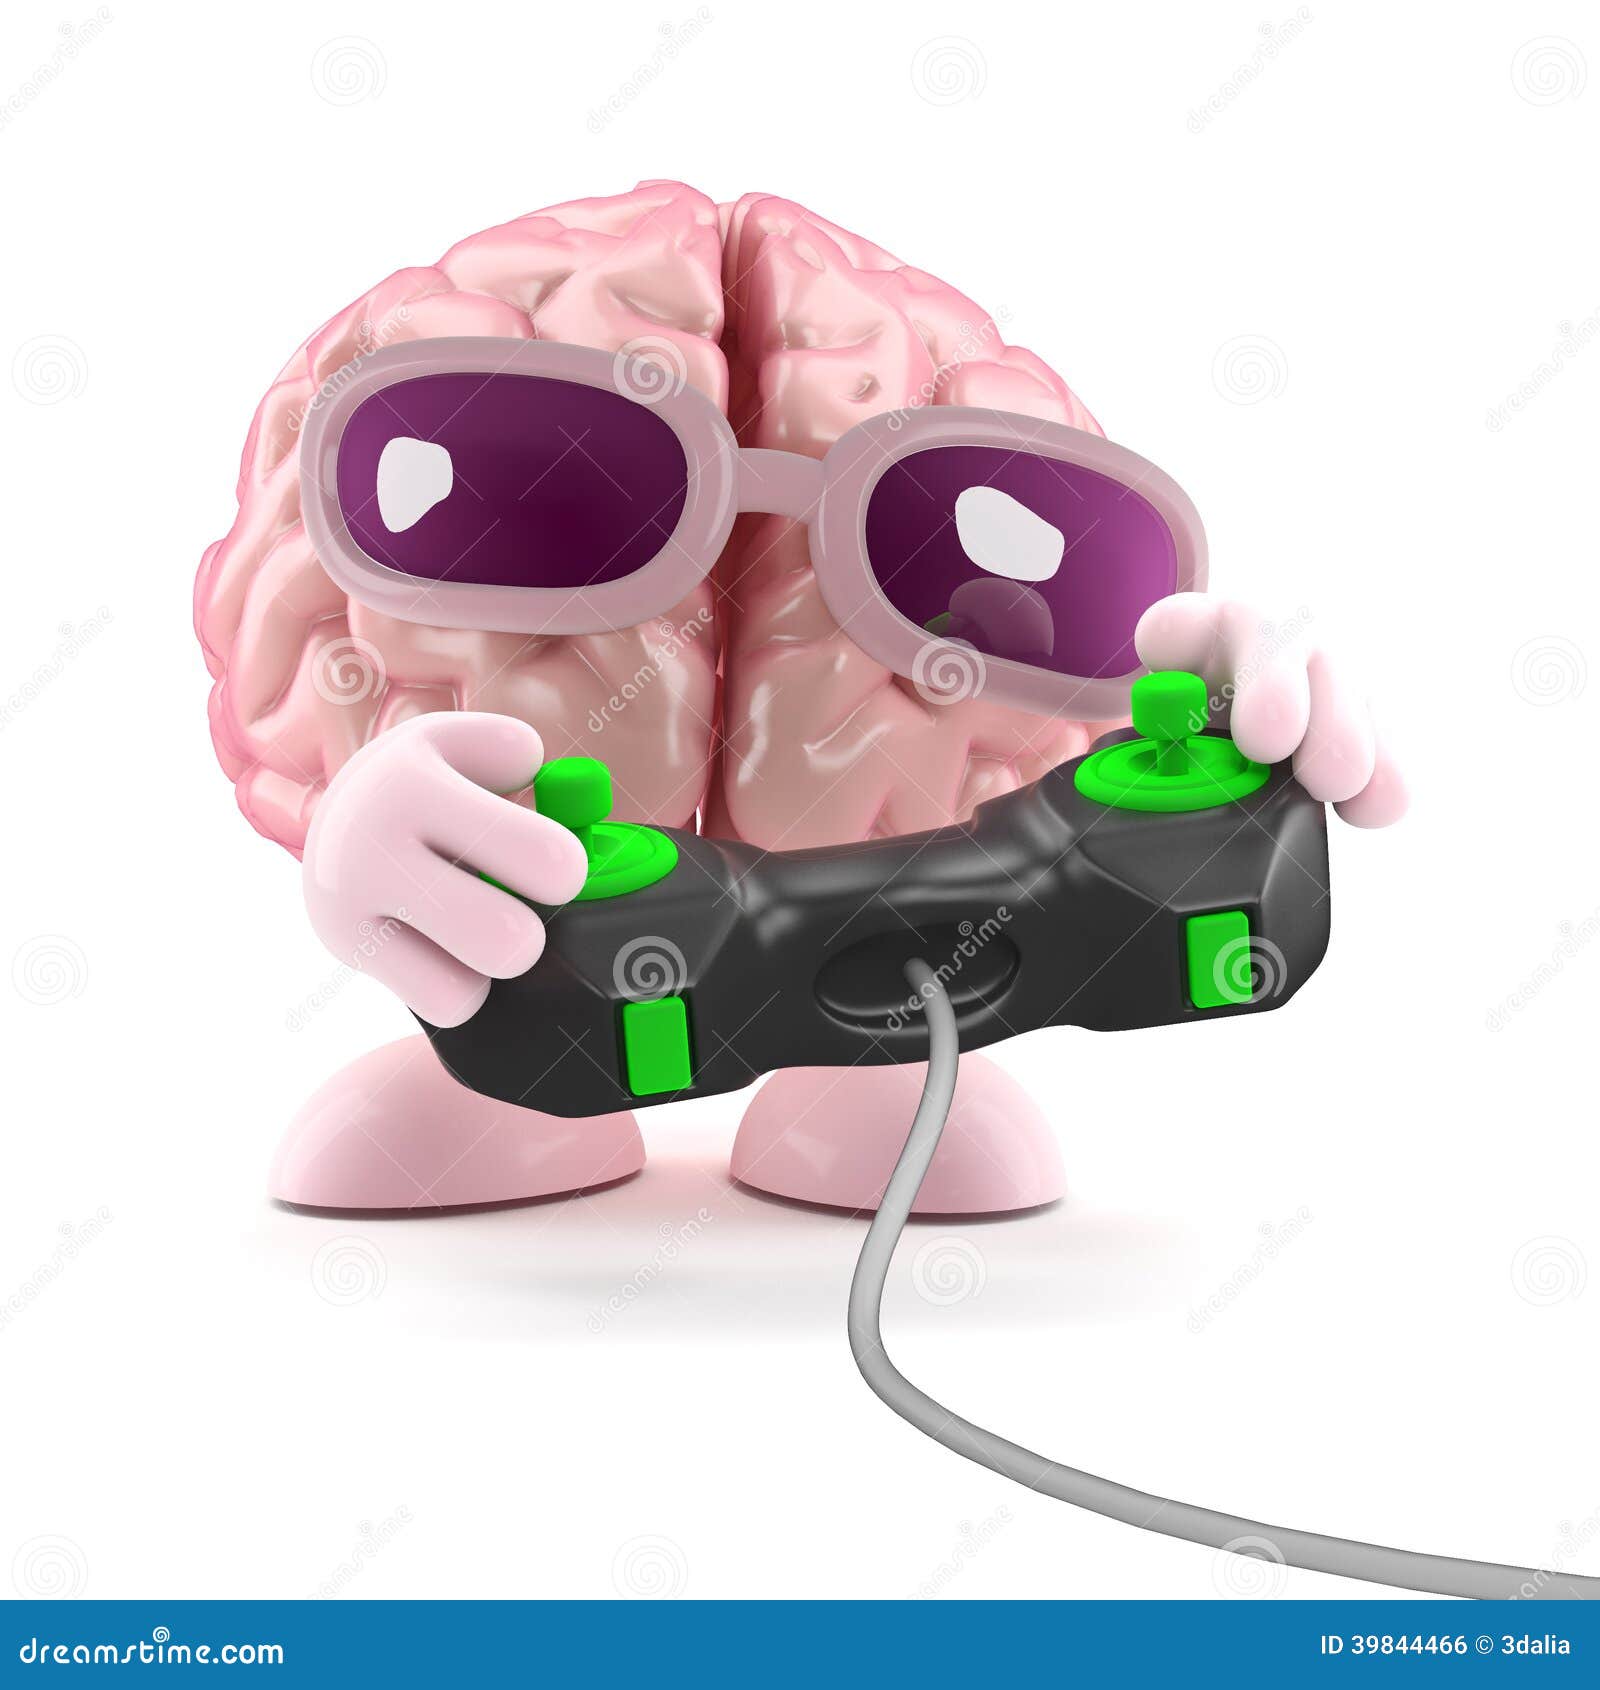 https://thumbs.dreamstime.com/z/d-brain-games-render-playing-videogame-39844466.jpg